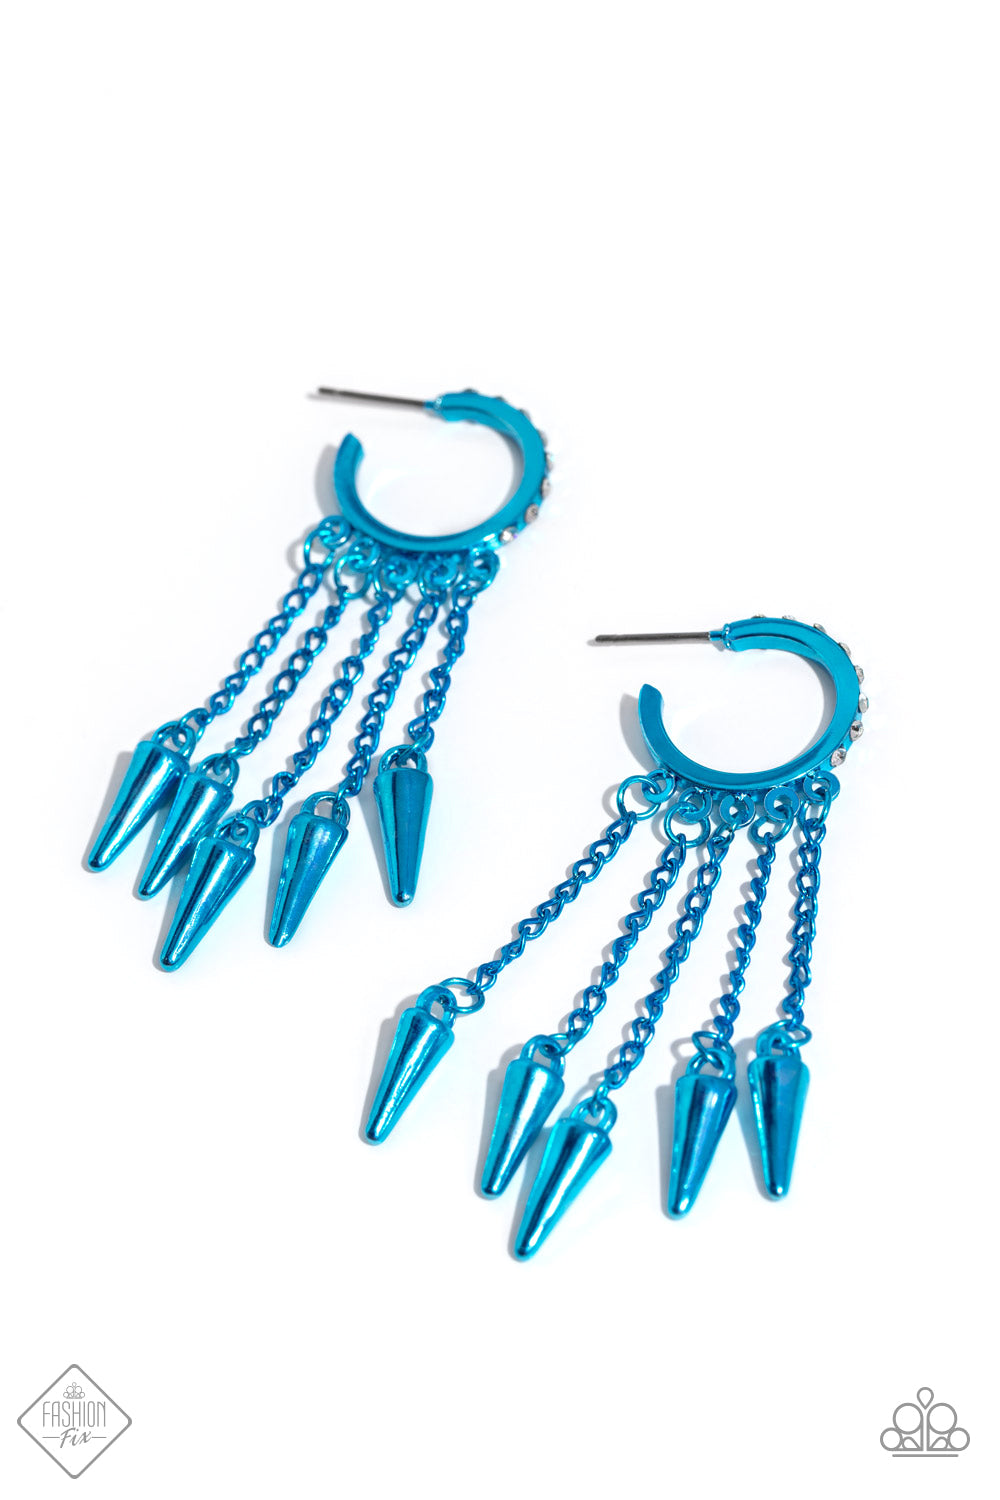 Piquant Punk - Blue Fashion Fix Earrings